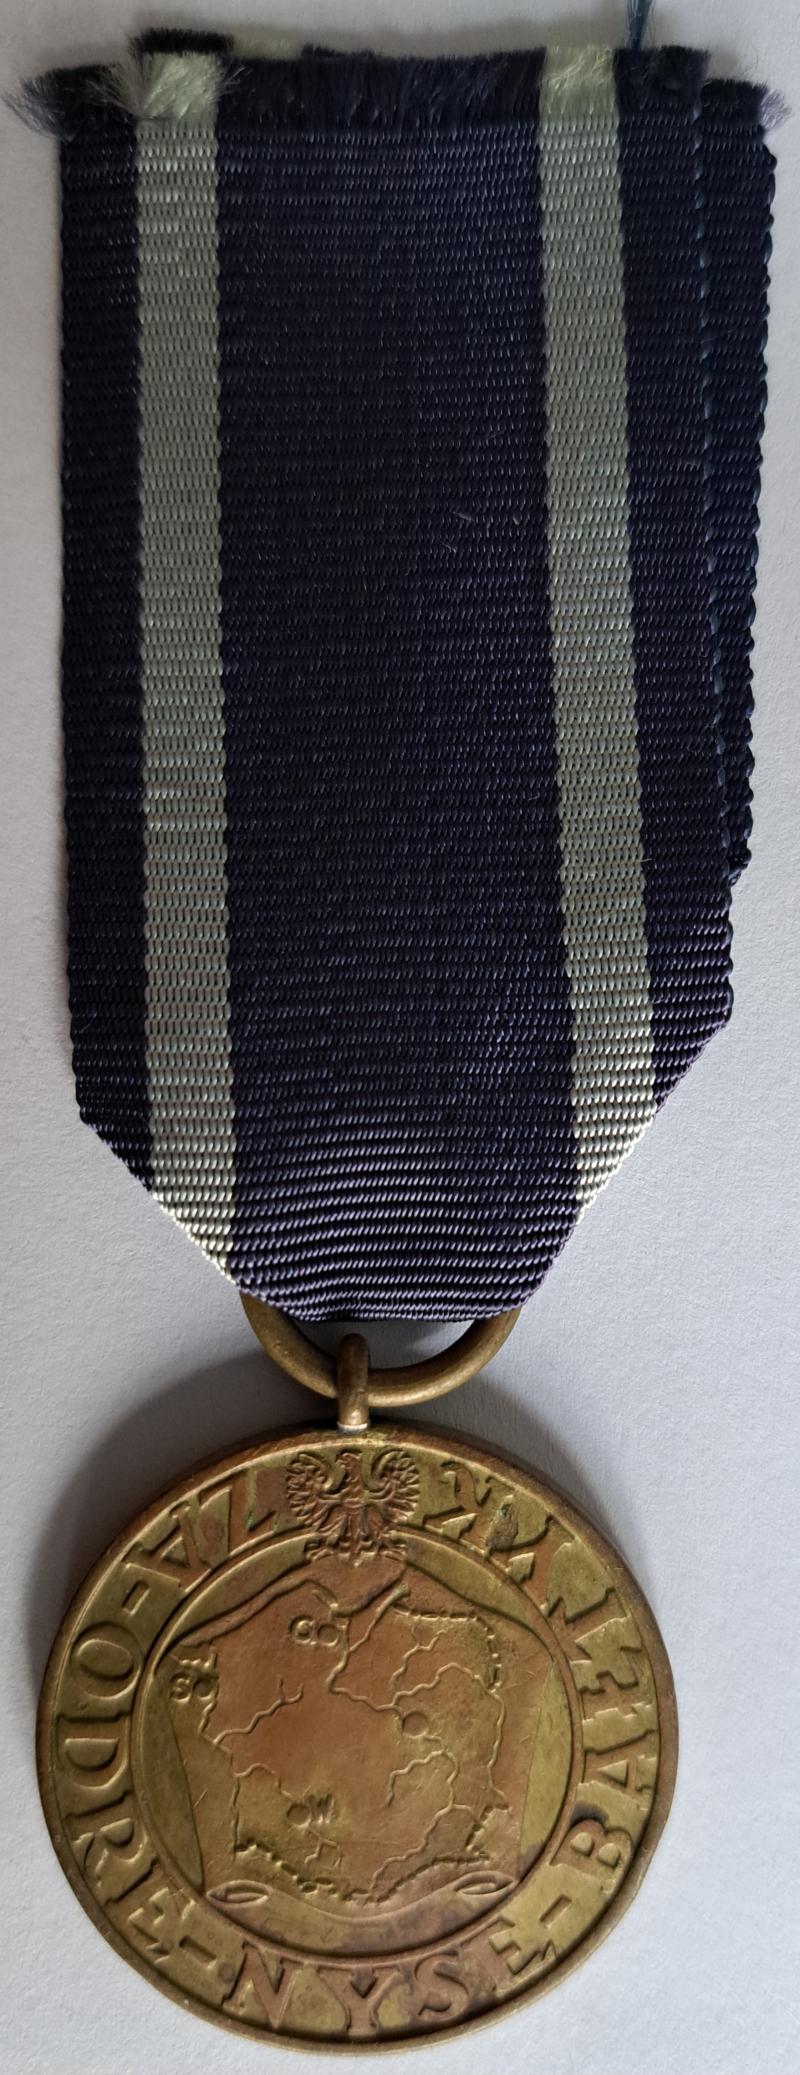 Poland Oder, Neisse, Baltic Medal